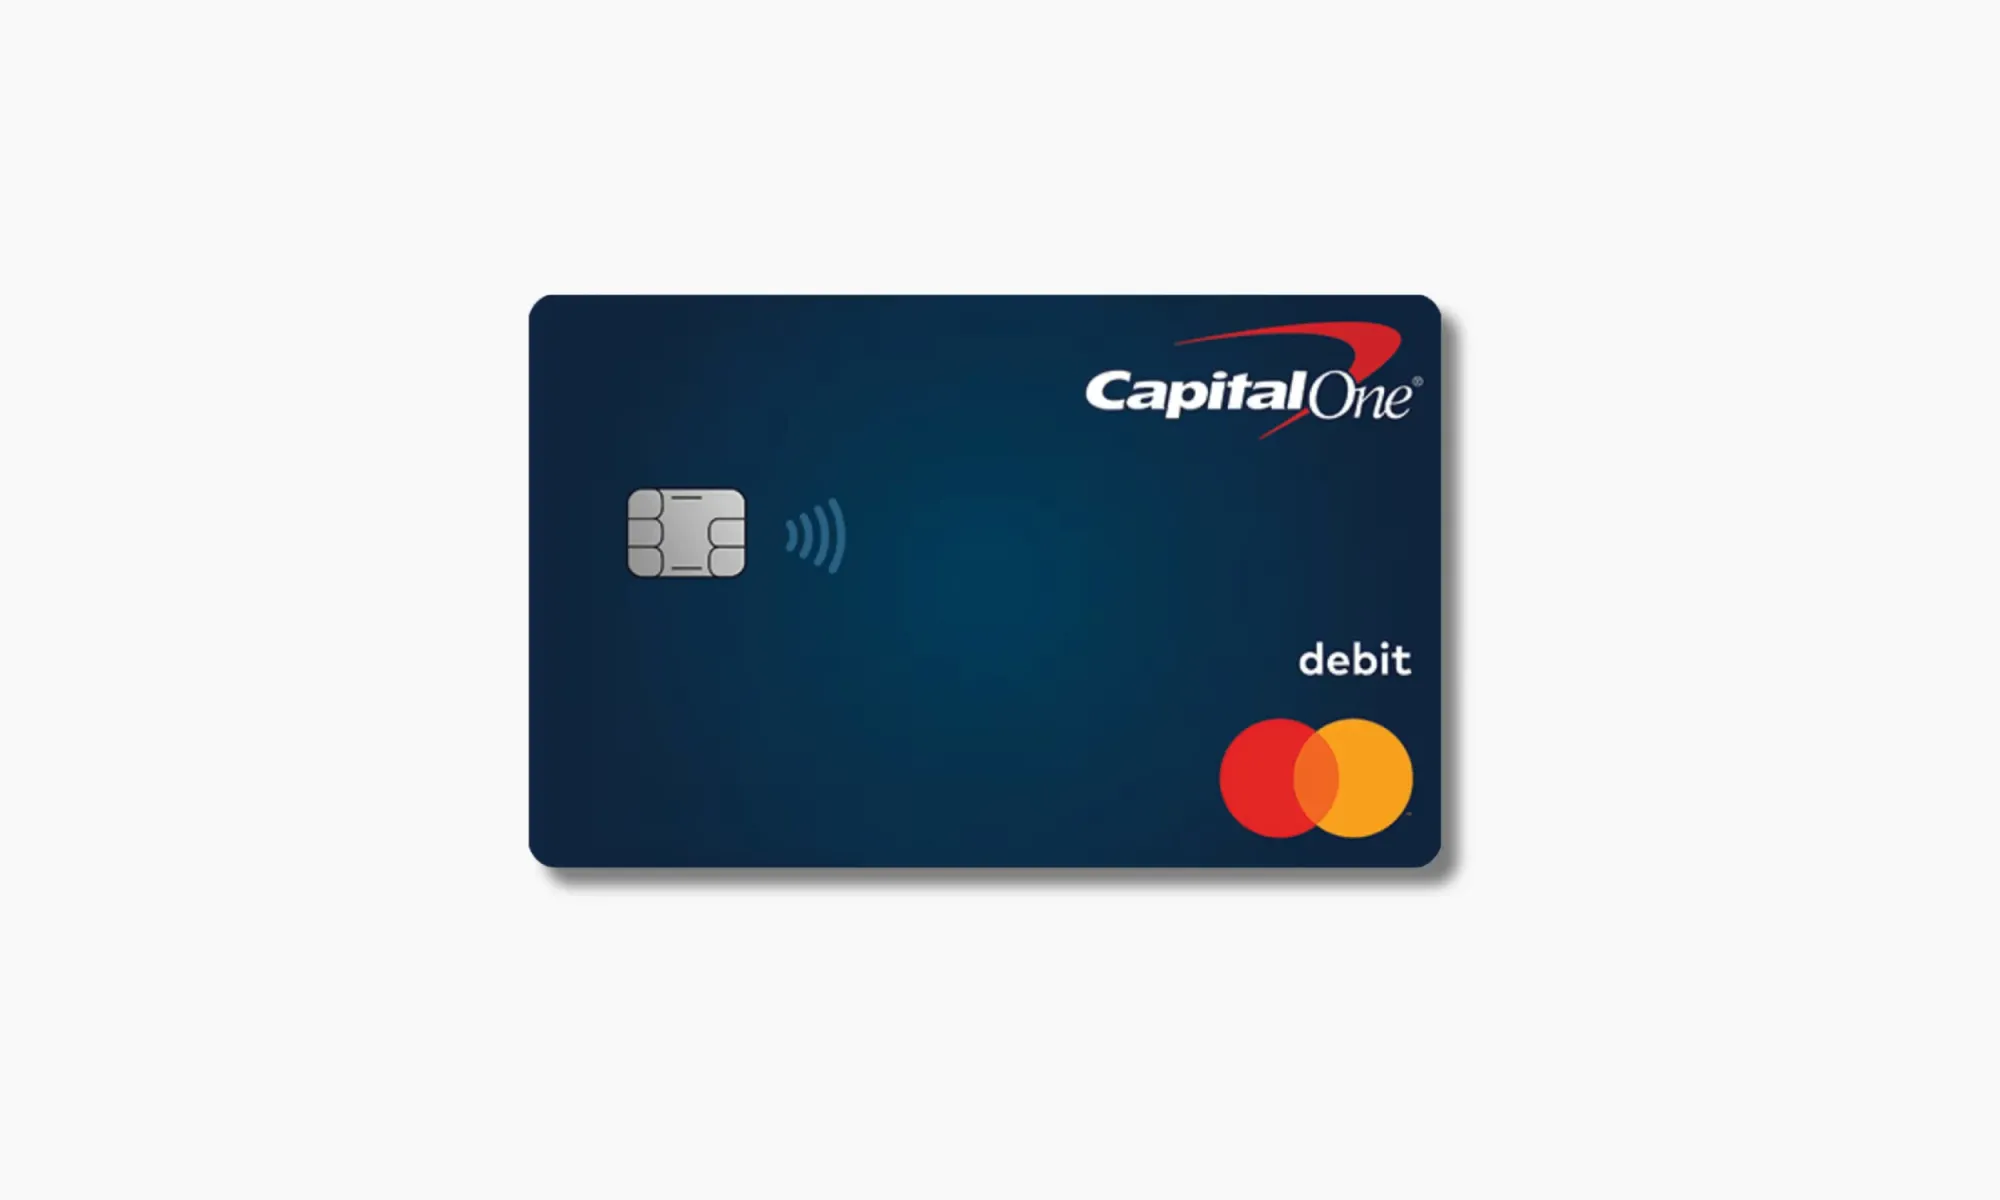 Capital One 360 debit card